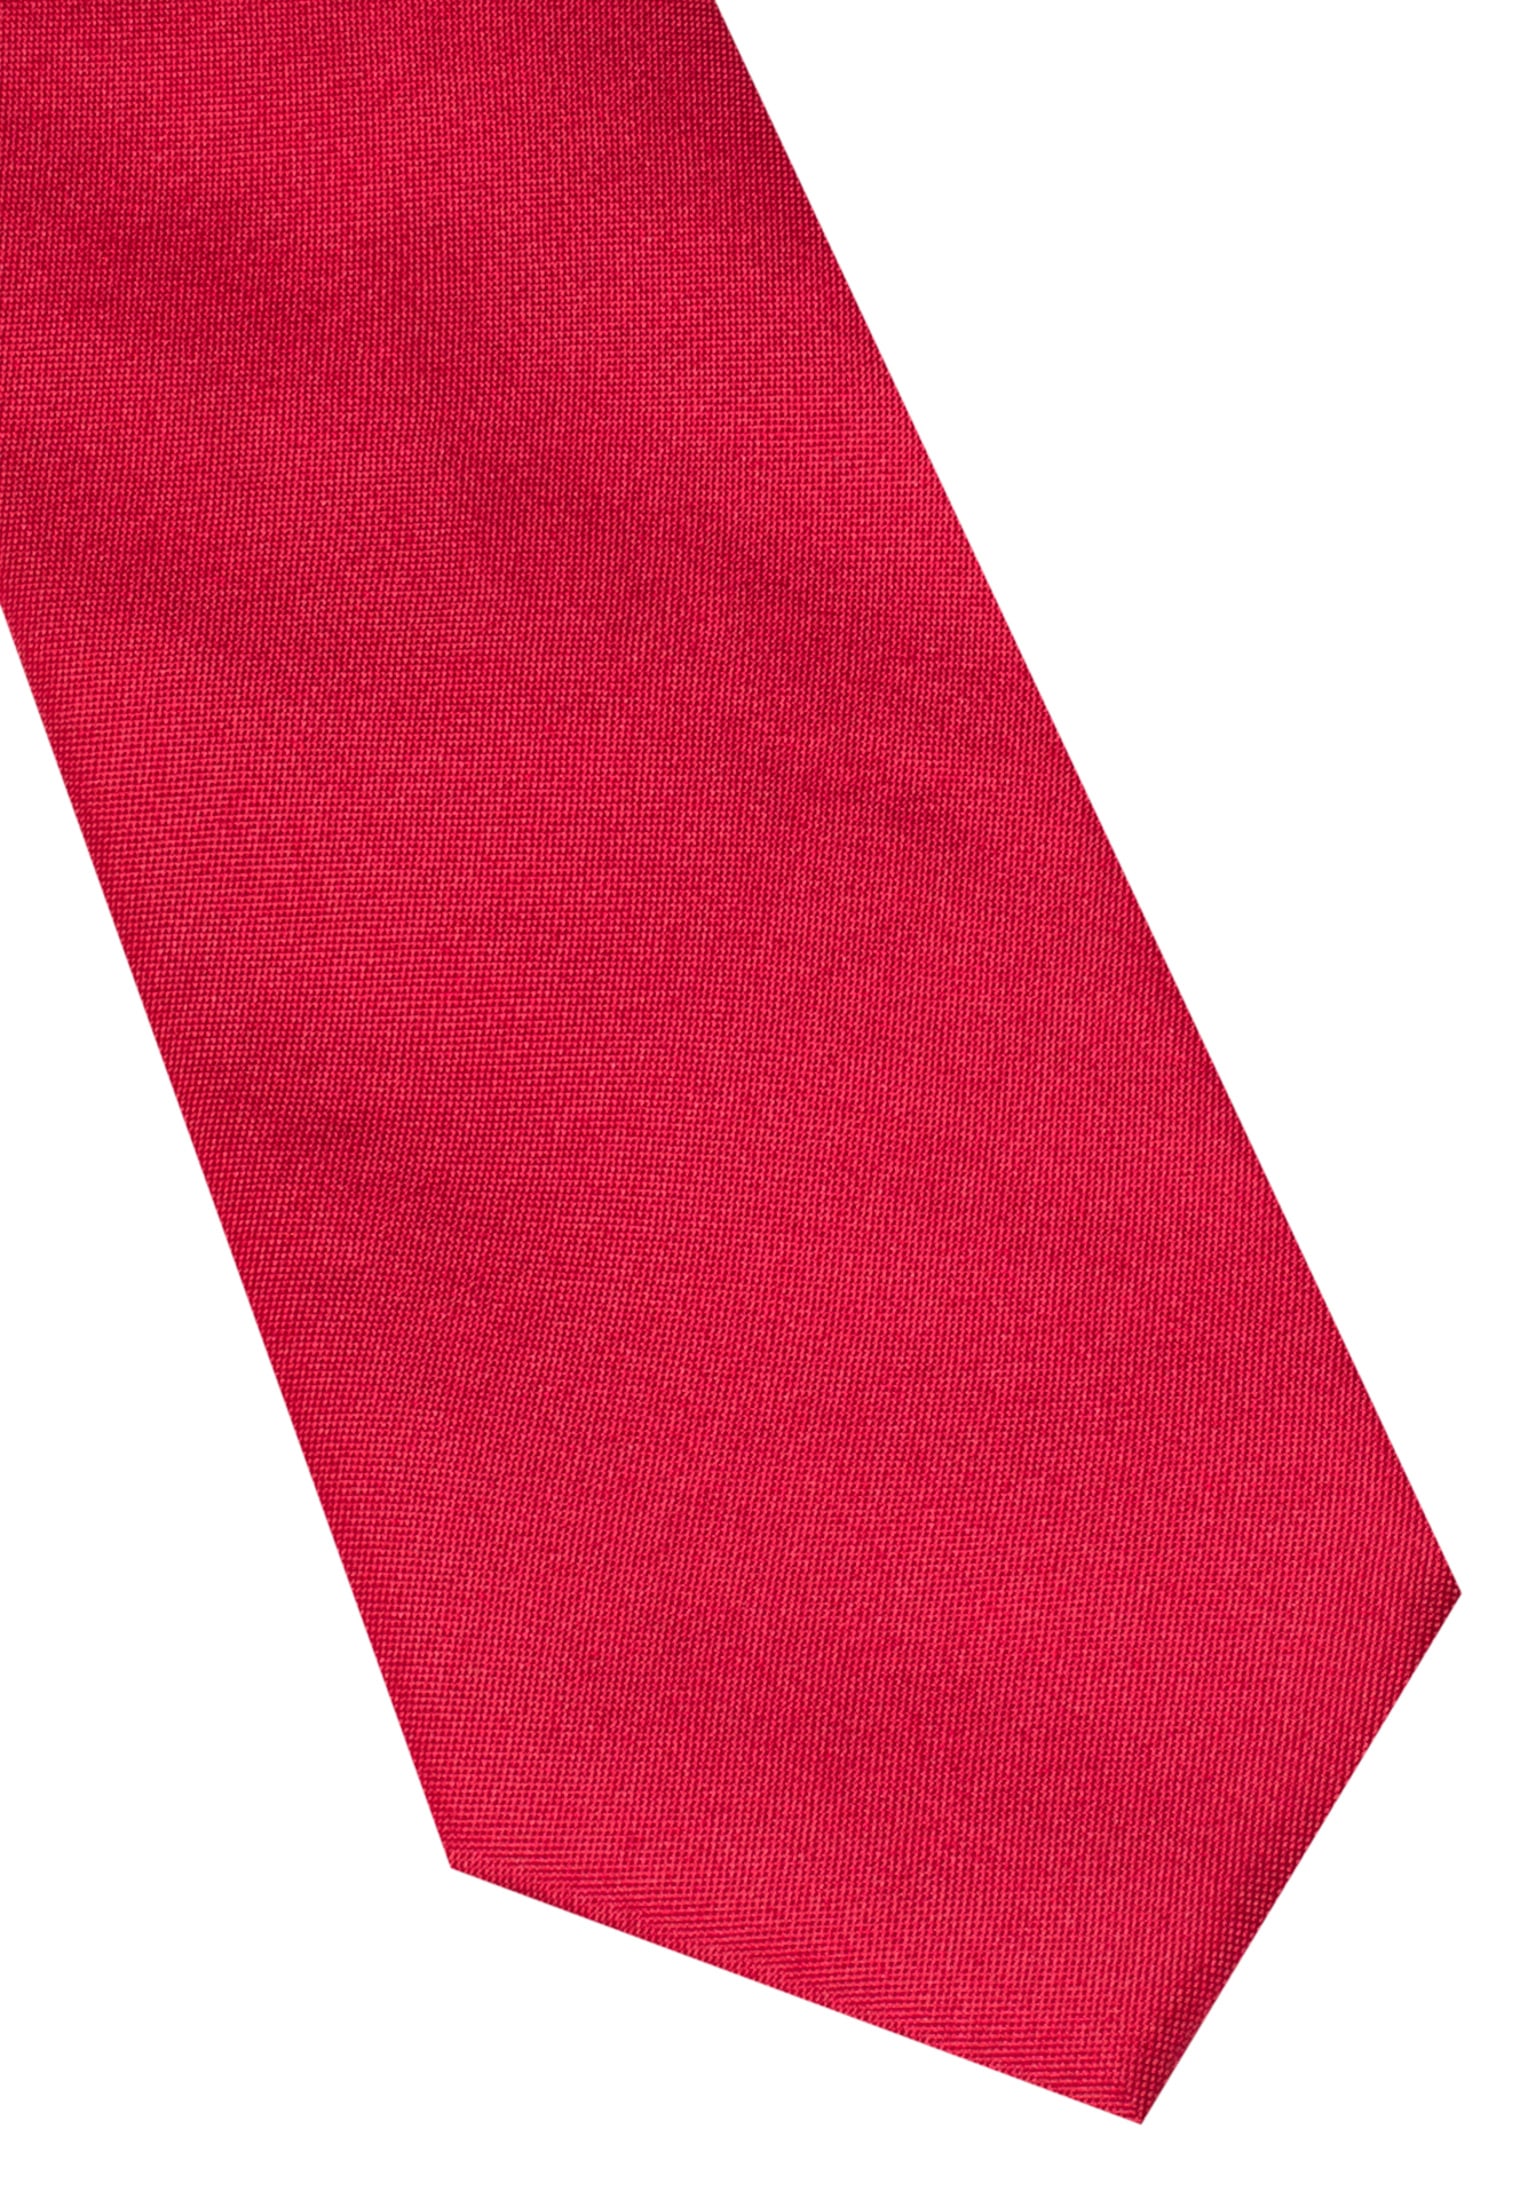 Krawatte in rot unifarben | 1AC00025-05-01-142 | rot 142 